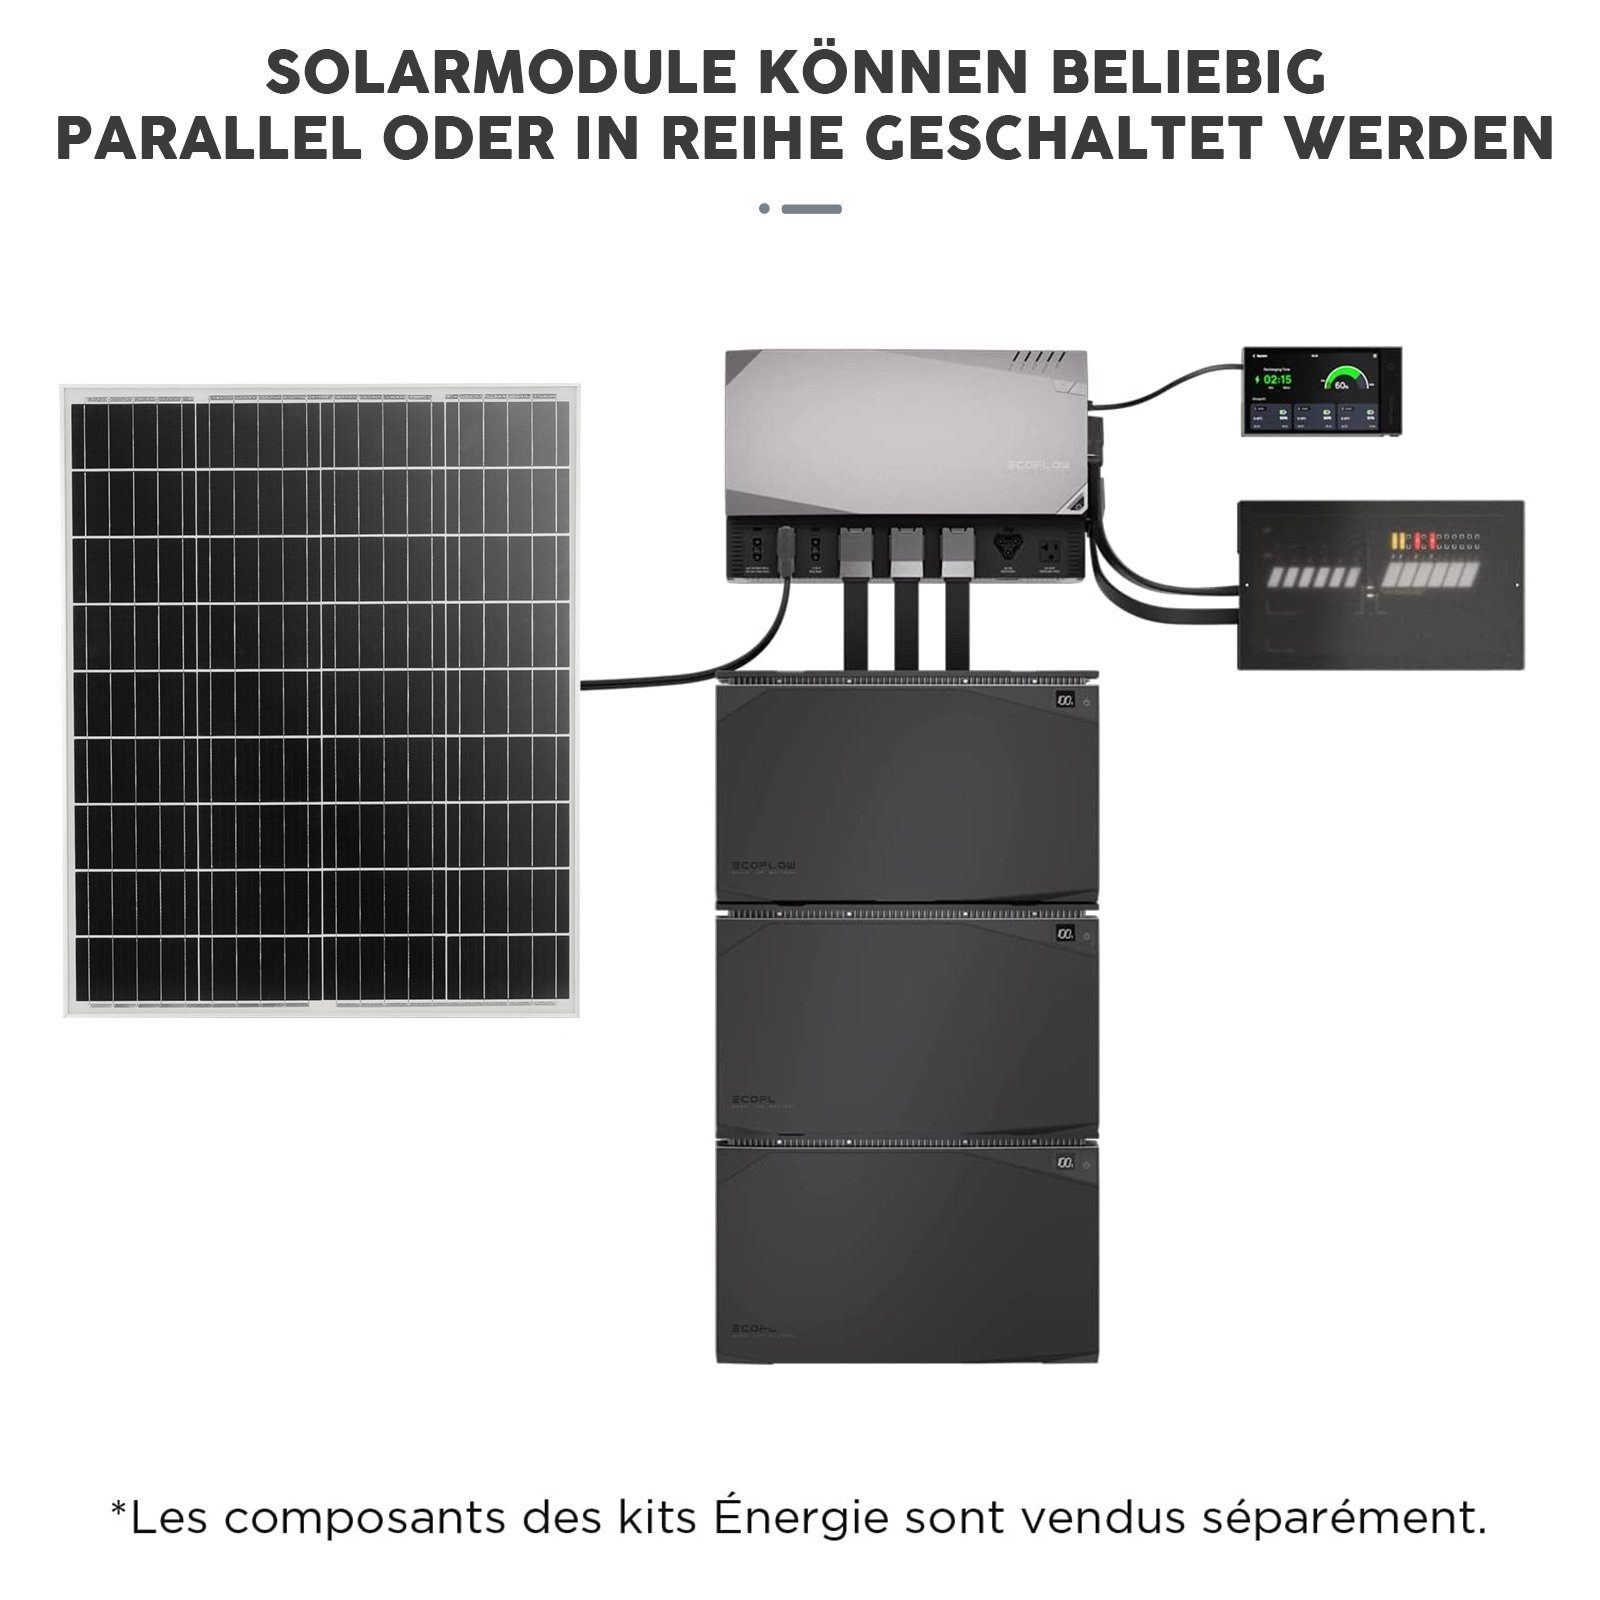 Solaranlage Solarpanel Balkonkraftwerk sonnenkollektor pool kehot solaranlage solarmodul